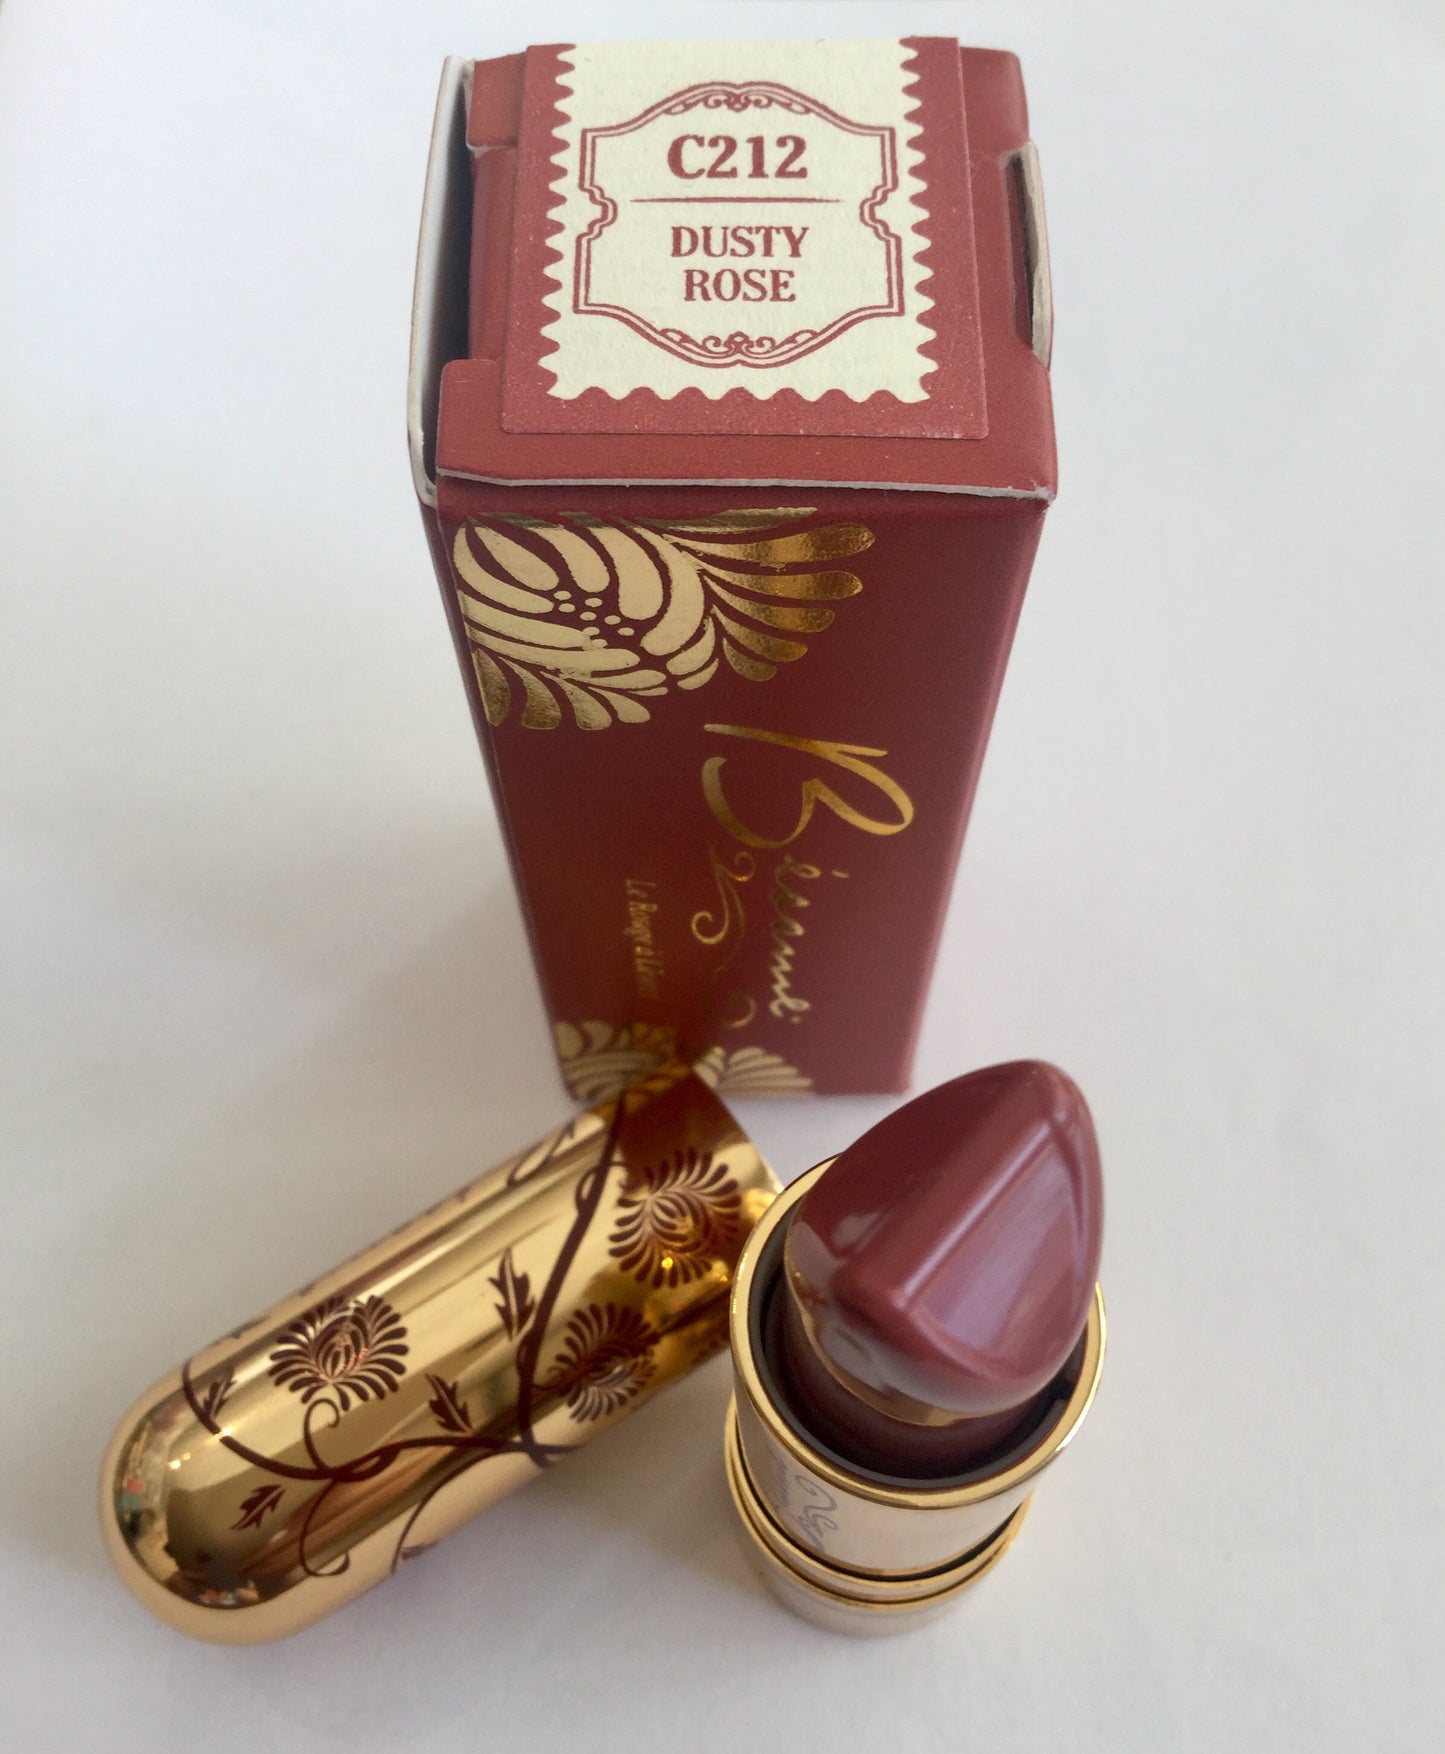 1969 Dusty Rose Lipstick